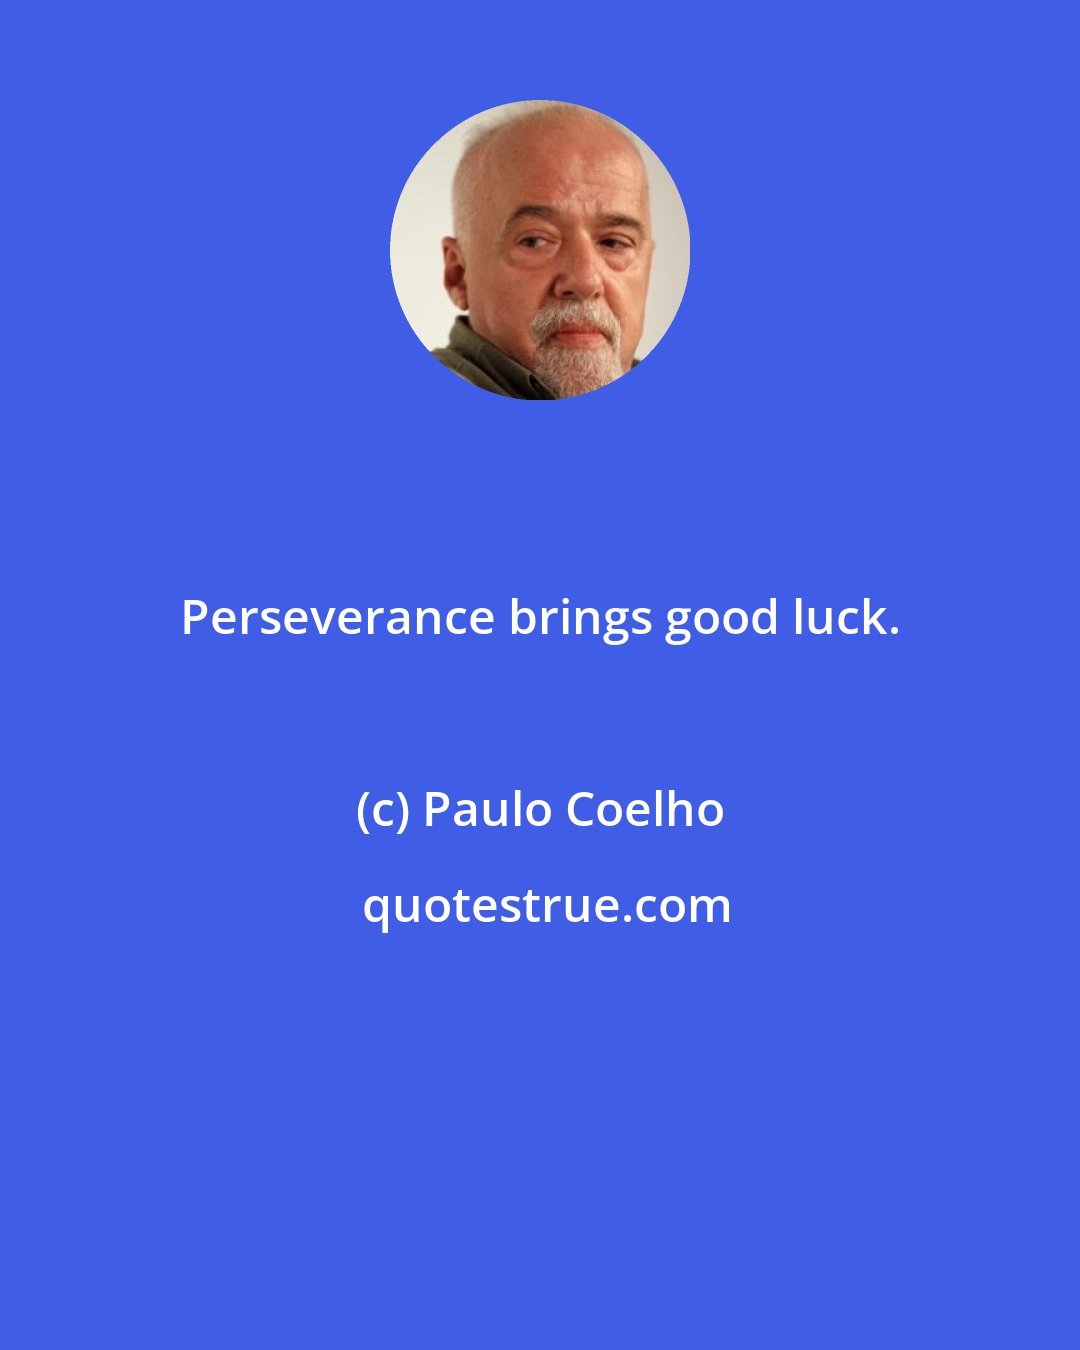 Paulo Coelho: Perseverance brings good luck.